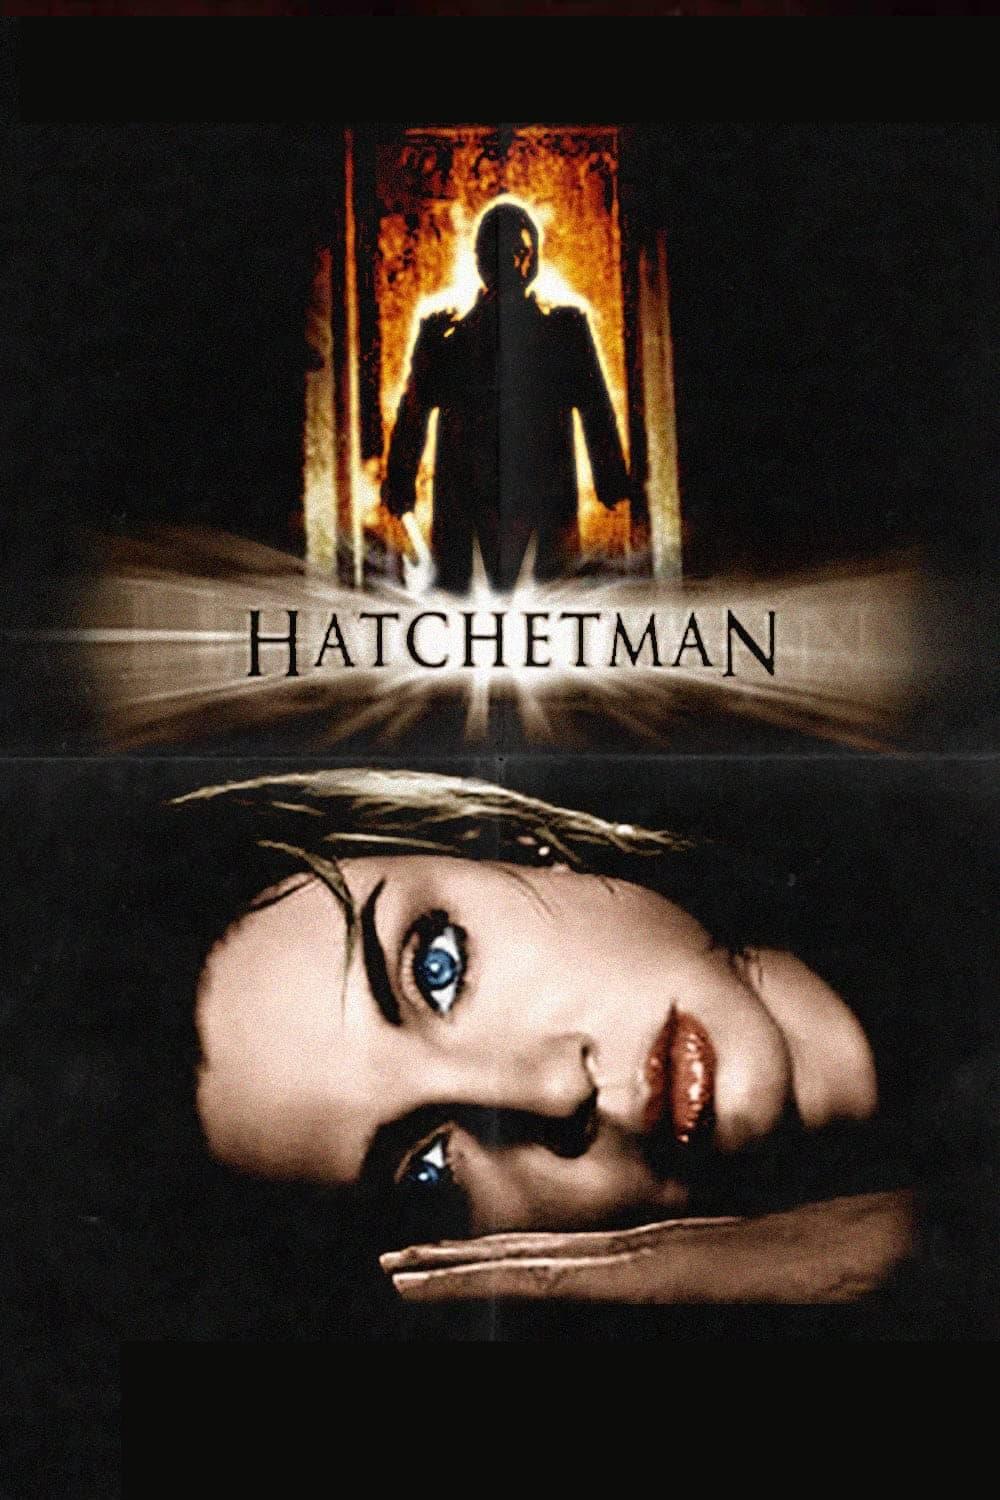 Hatchetman poster